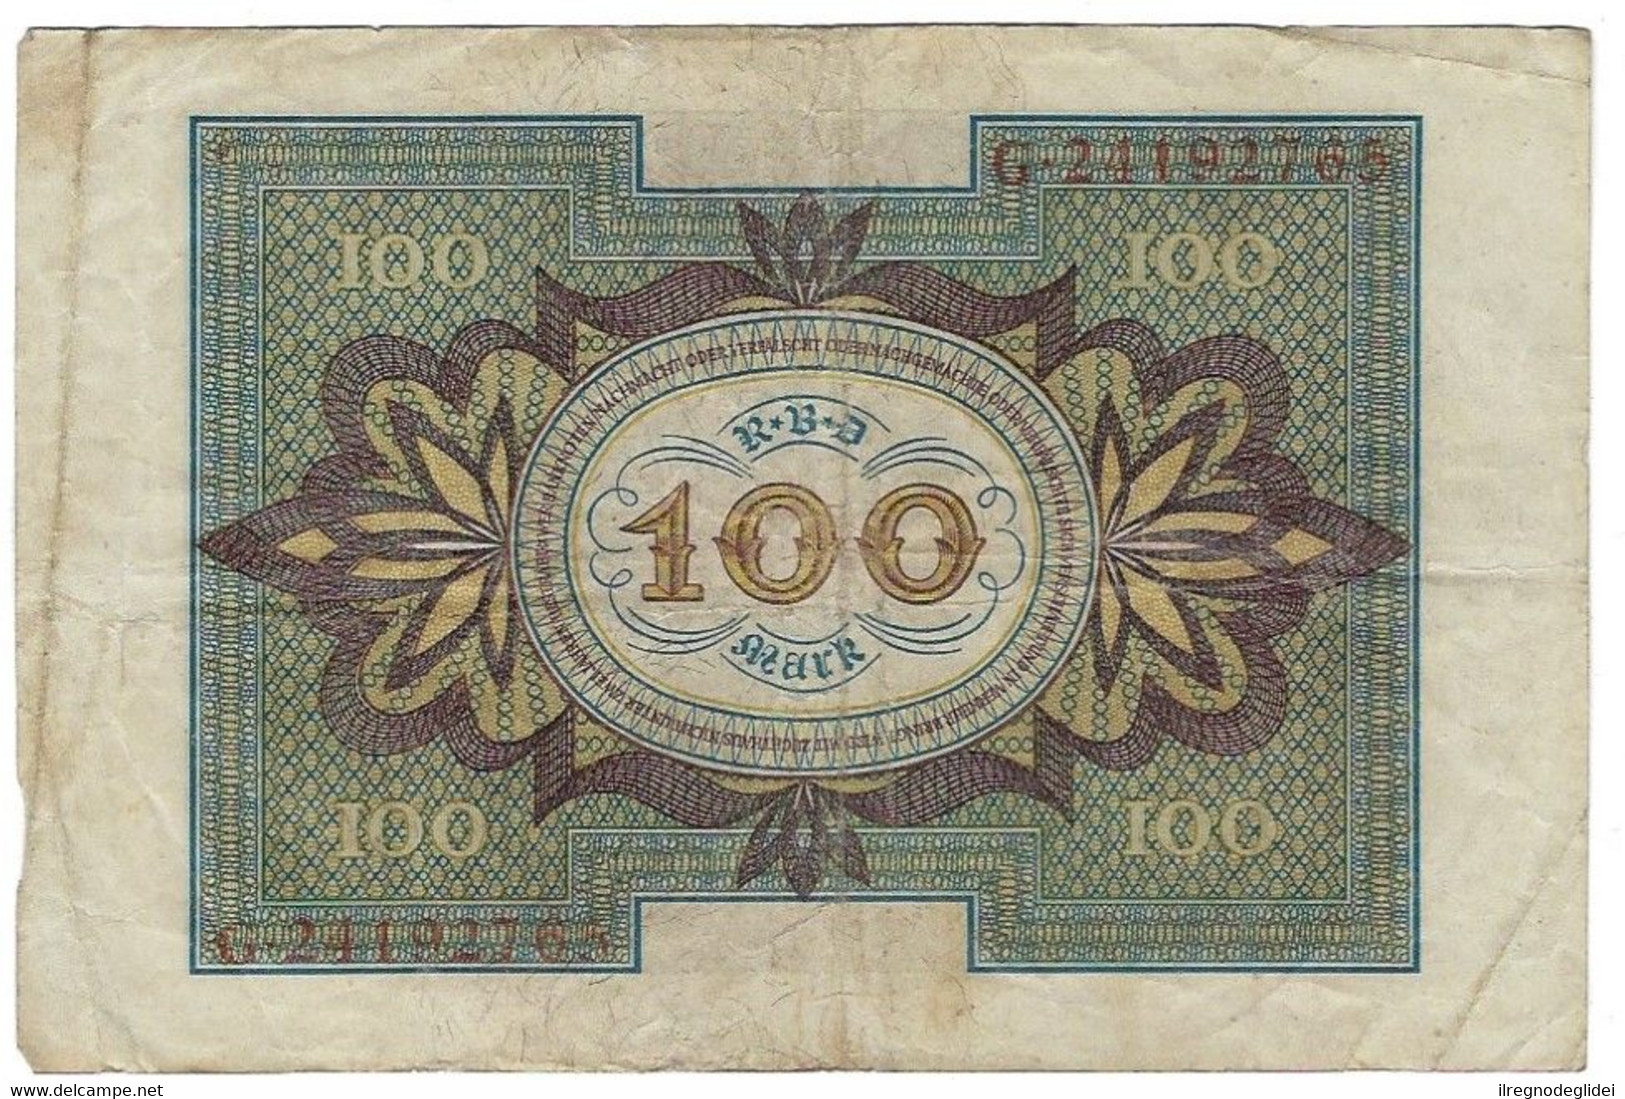 GERMANIA IMPERO 100 MARCHI - WYSIWYG  - N° SERIALE G24192763 - CARTAMONETA - PAPER MONEY - 100 Mark